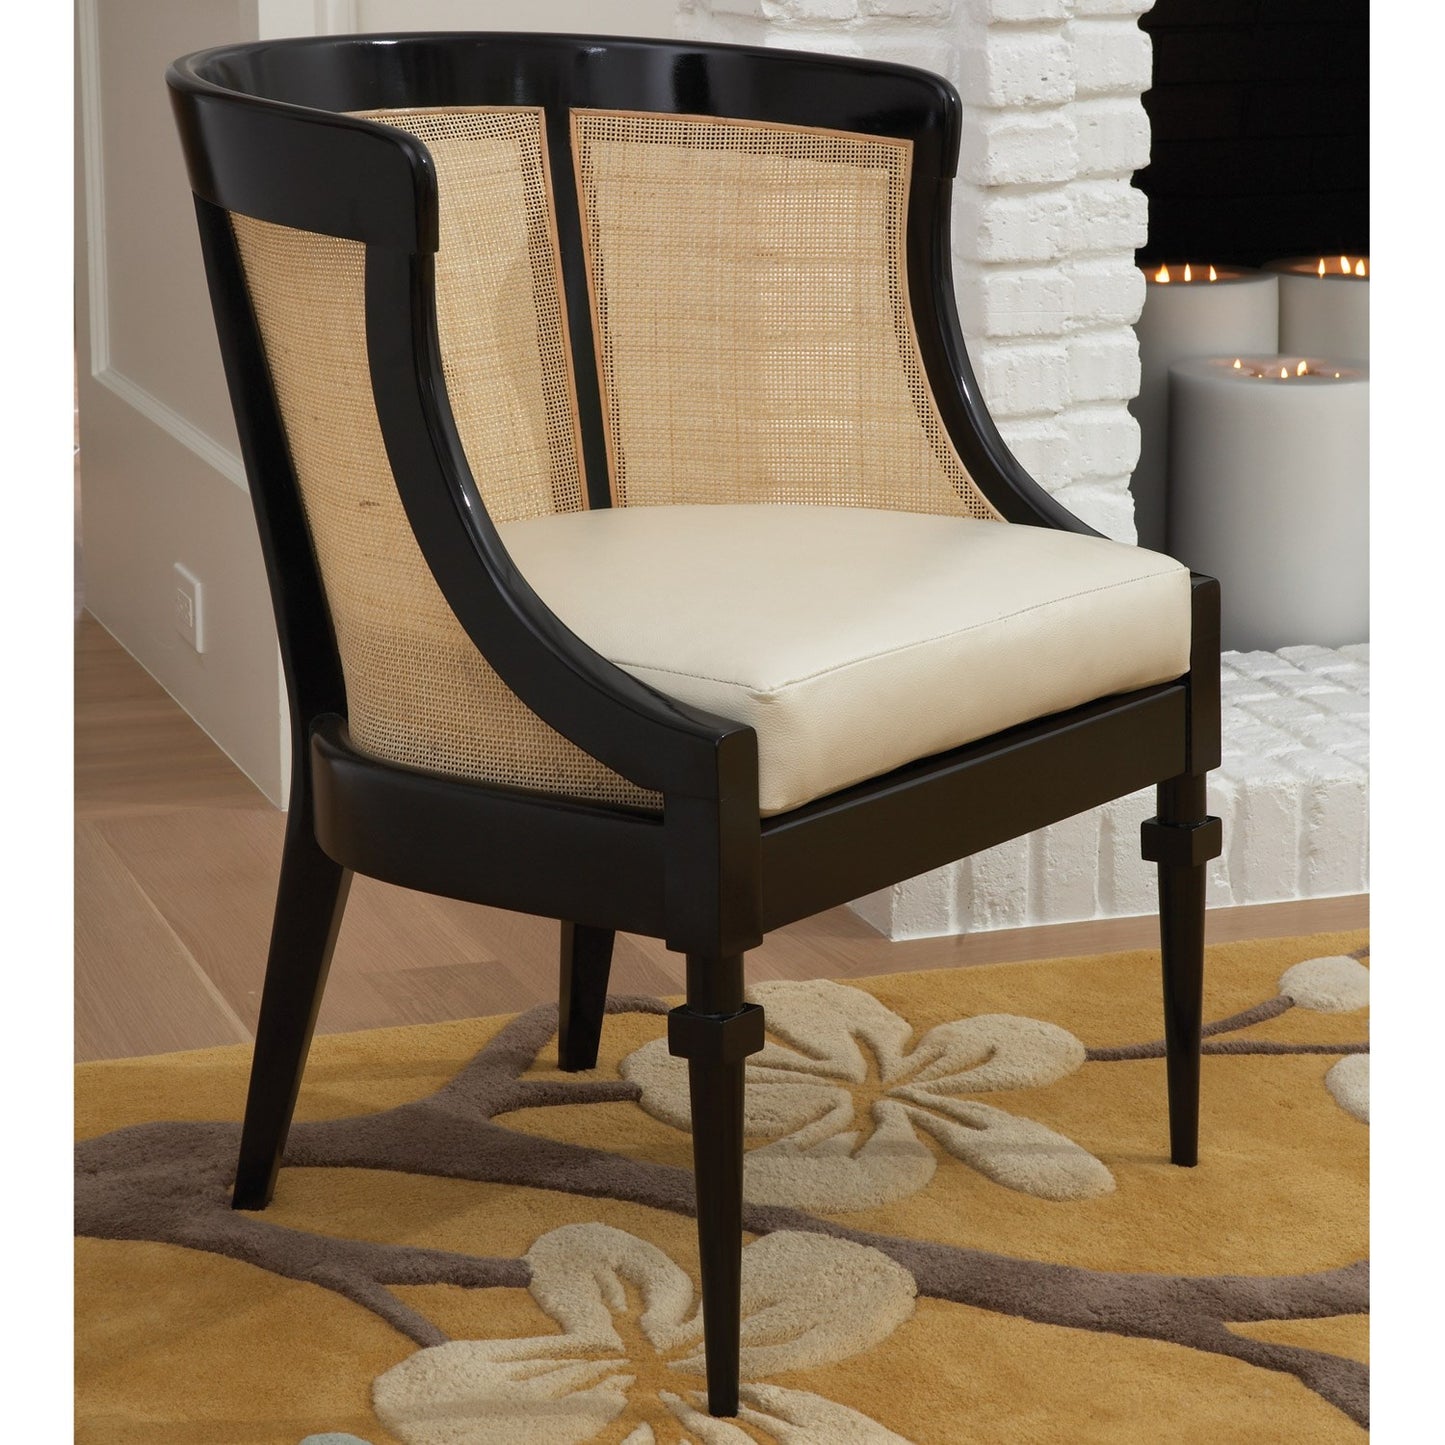 Cane Chair - Black - Grats Decor Interior Design & Build Inc.